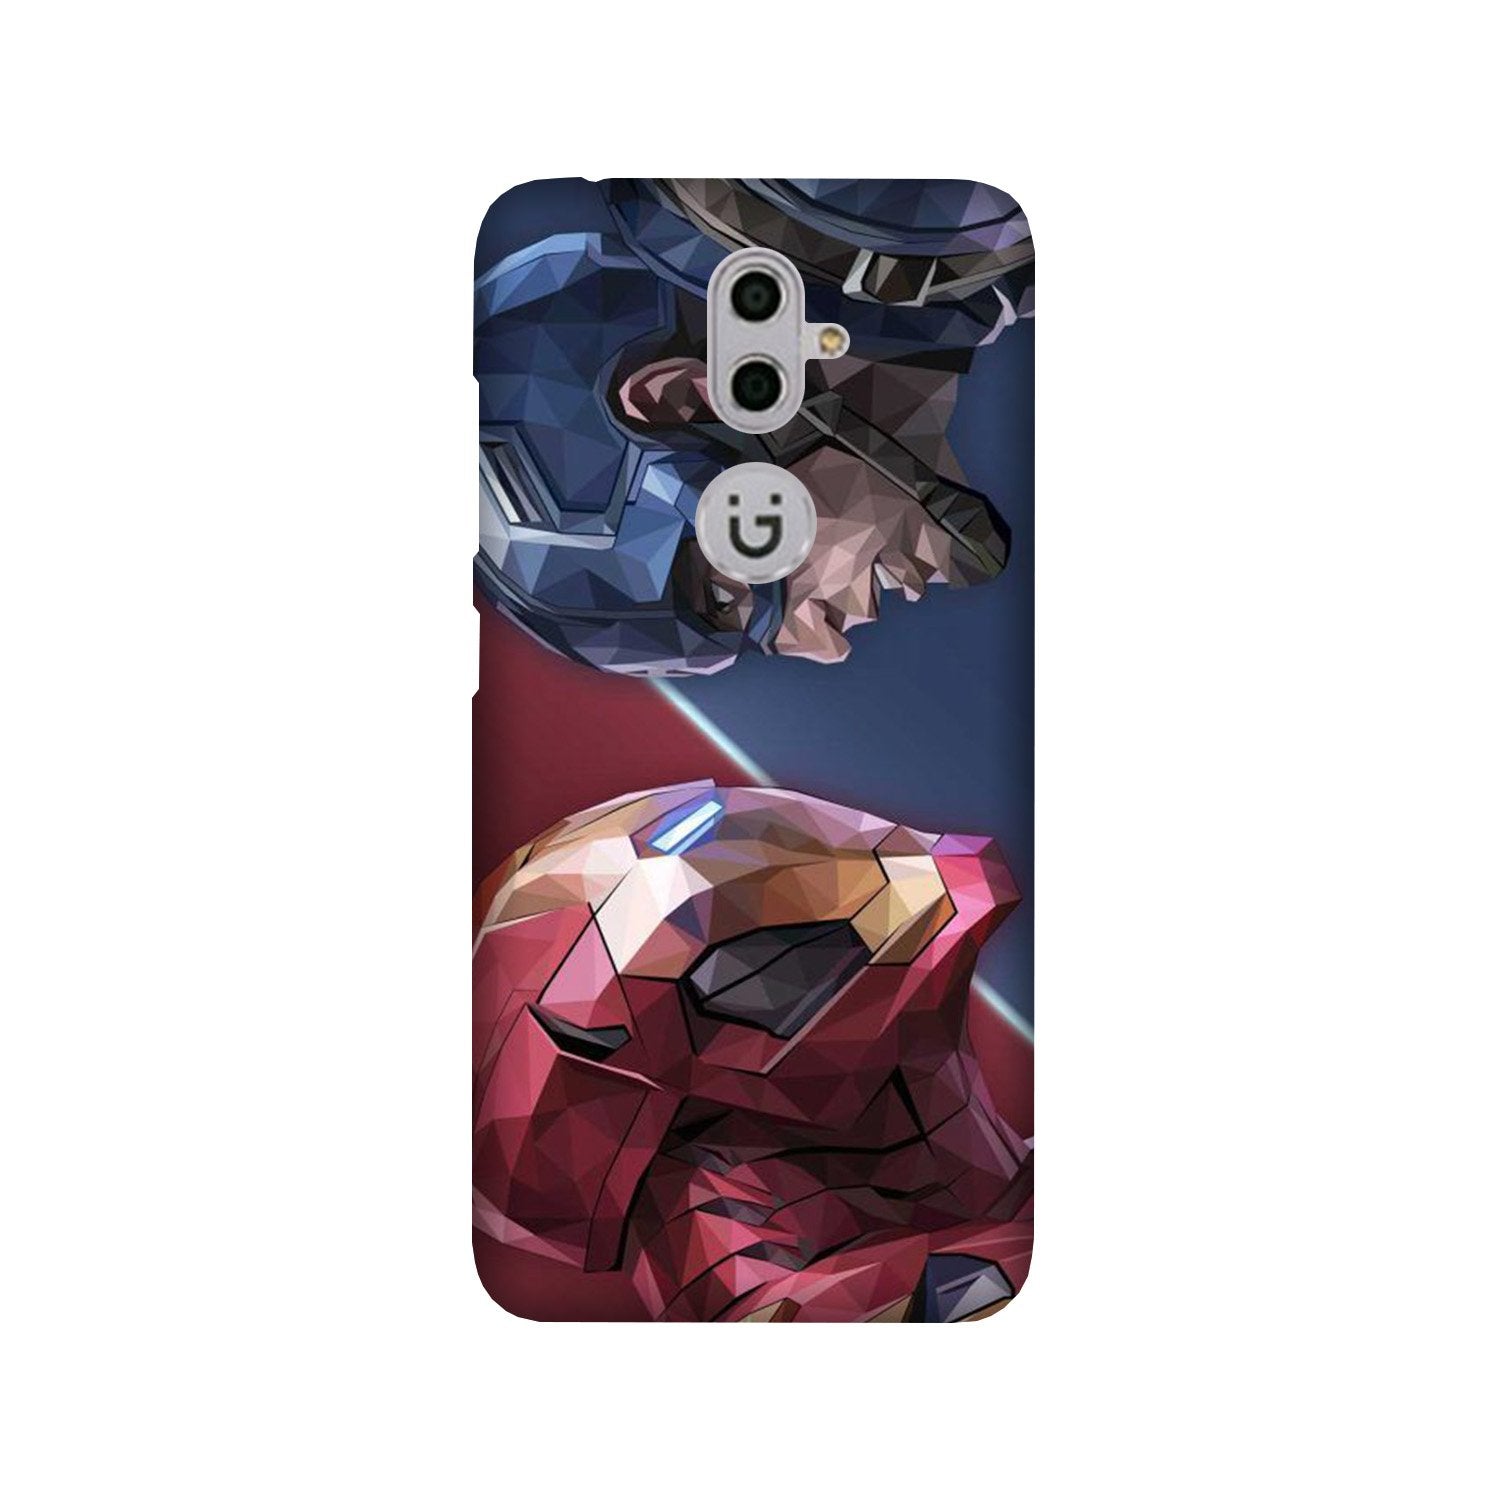 Ironman Captain America Case for Gionee S9 (Design No. 245)